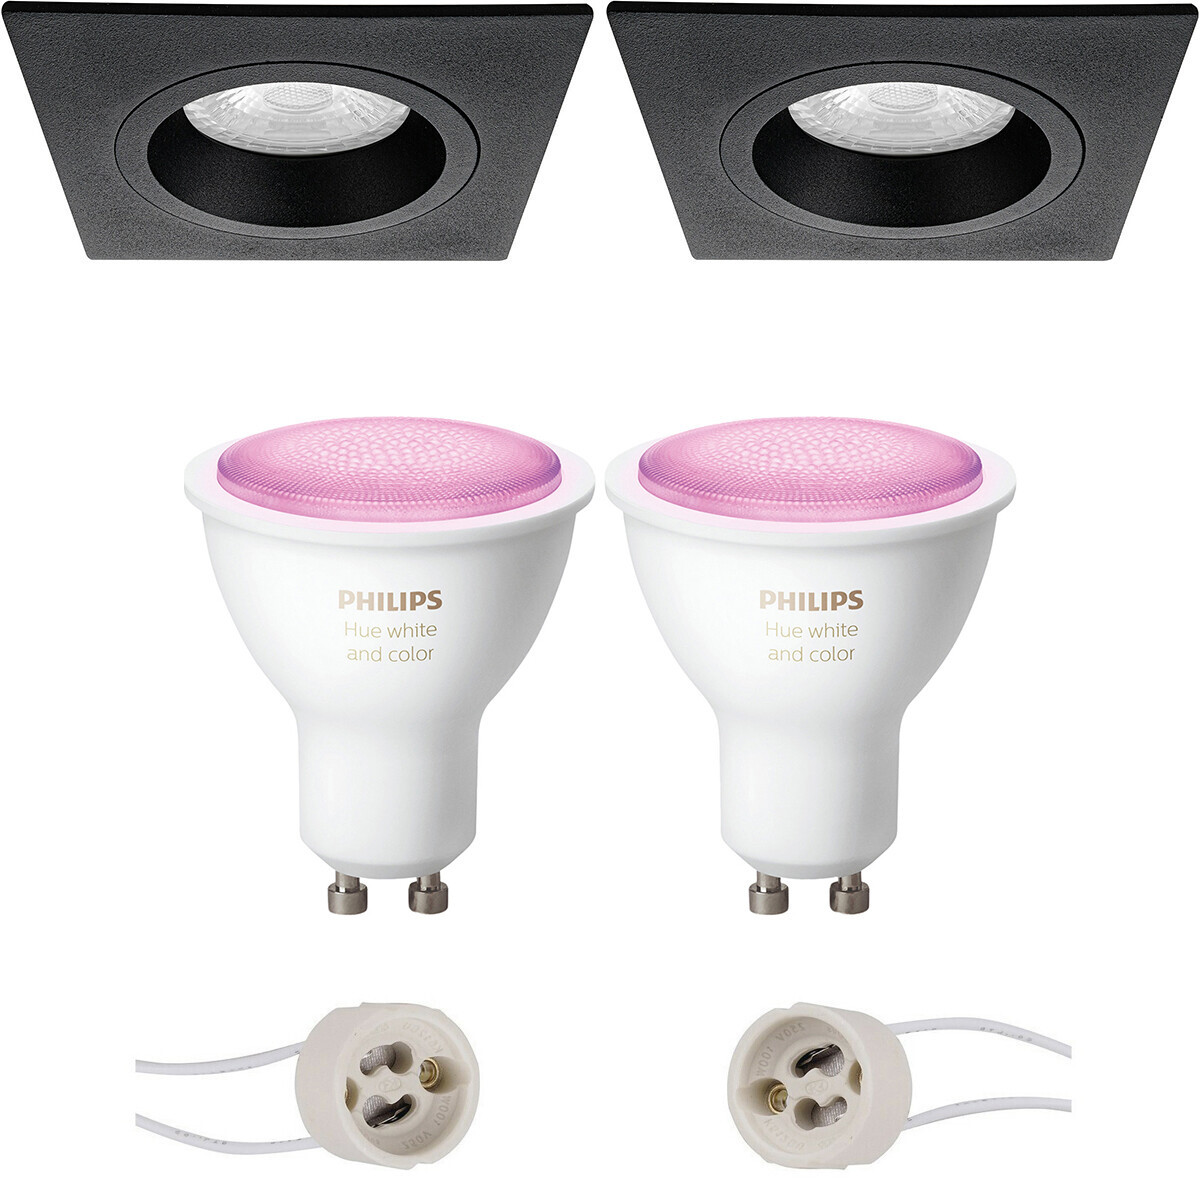 Pragmi Rodos Pro - Inbouw Vierkant - Mat Zwart - 93mm - Philips Hue - LED Spot Set GU10 - White and Color Ambiance - Bluetooth